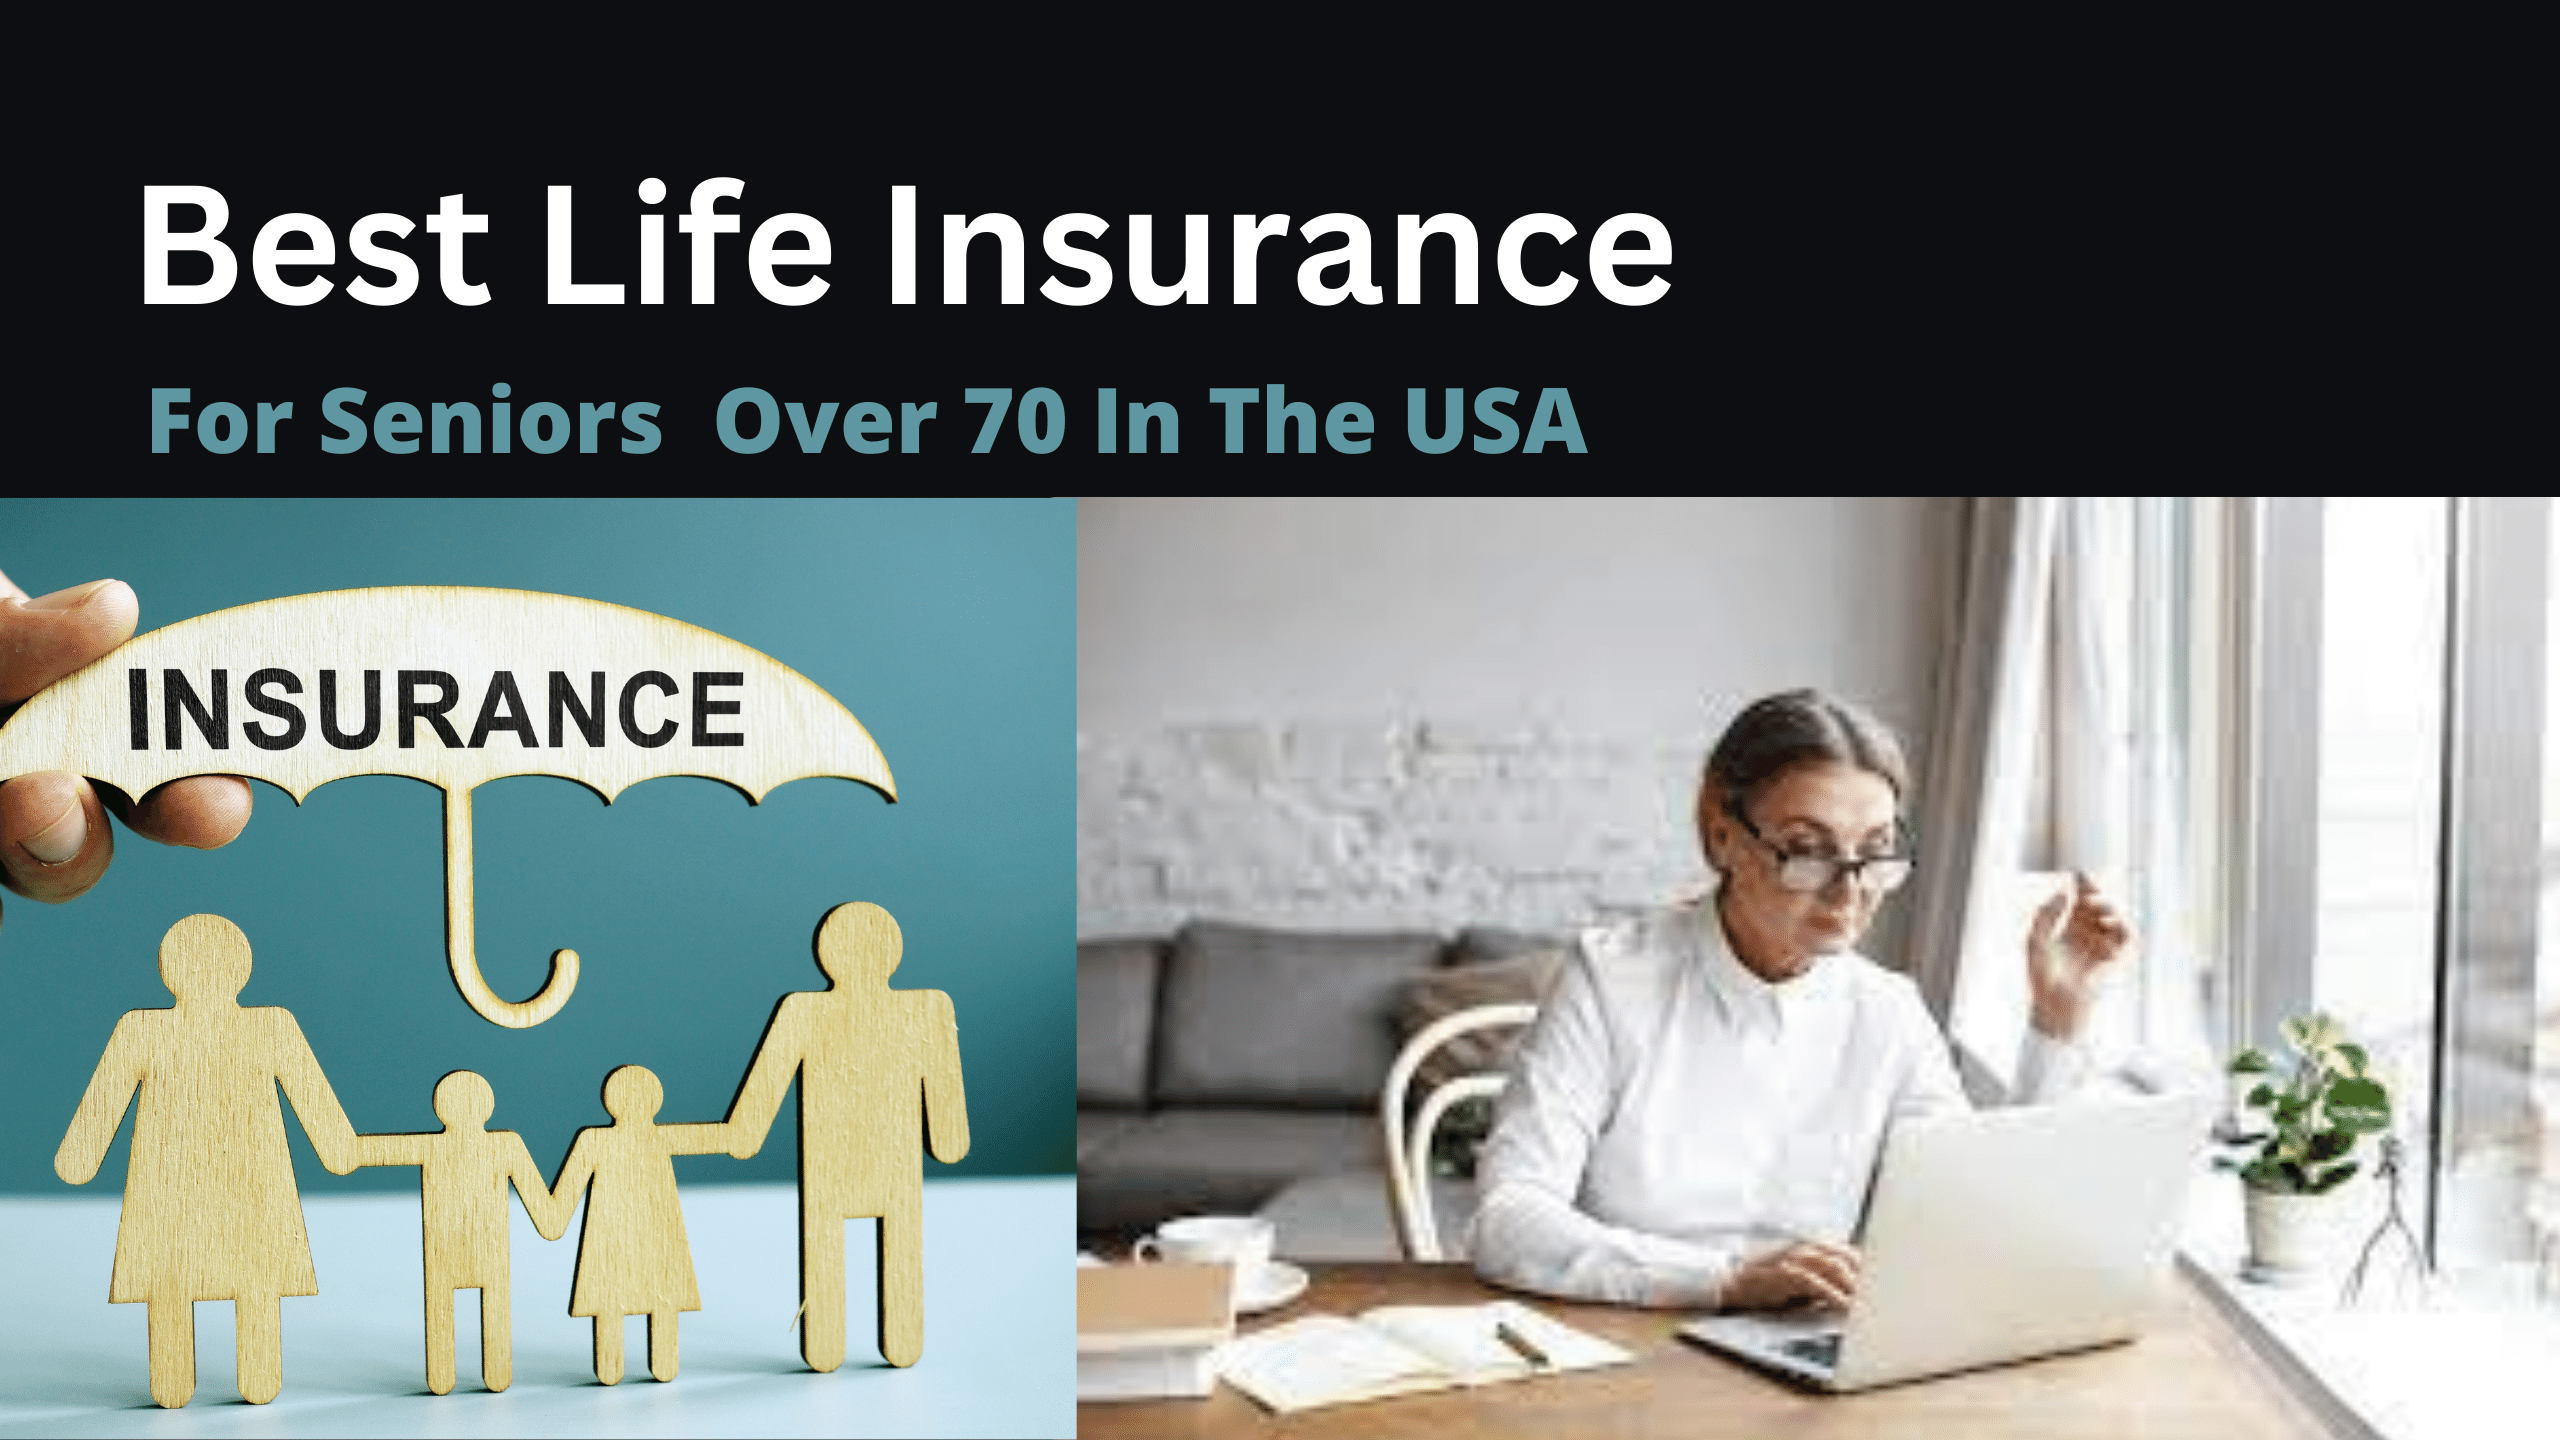 Best life insurance for seniors over 70 in the USA